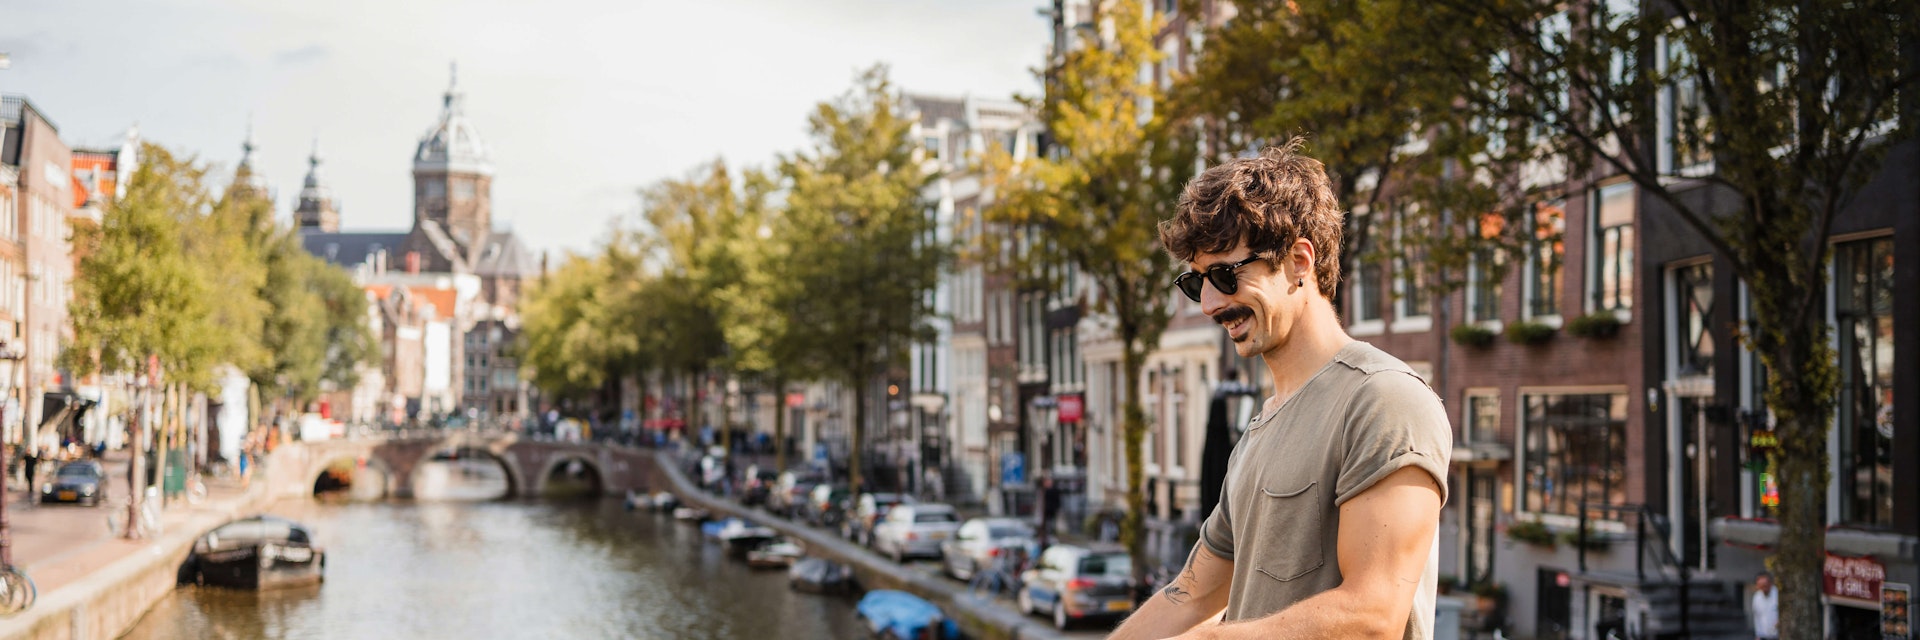 Man riding bike through Amsterdam.